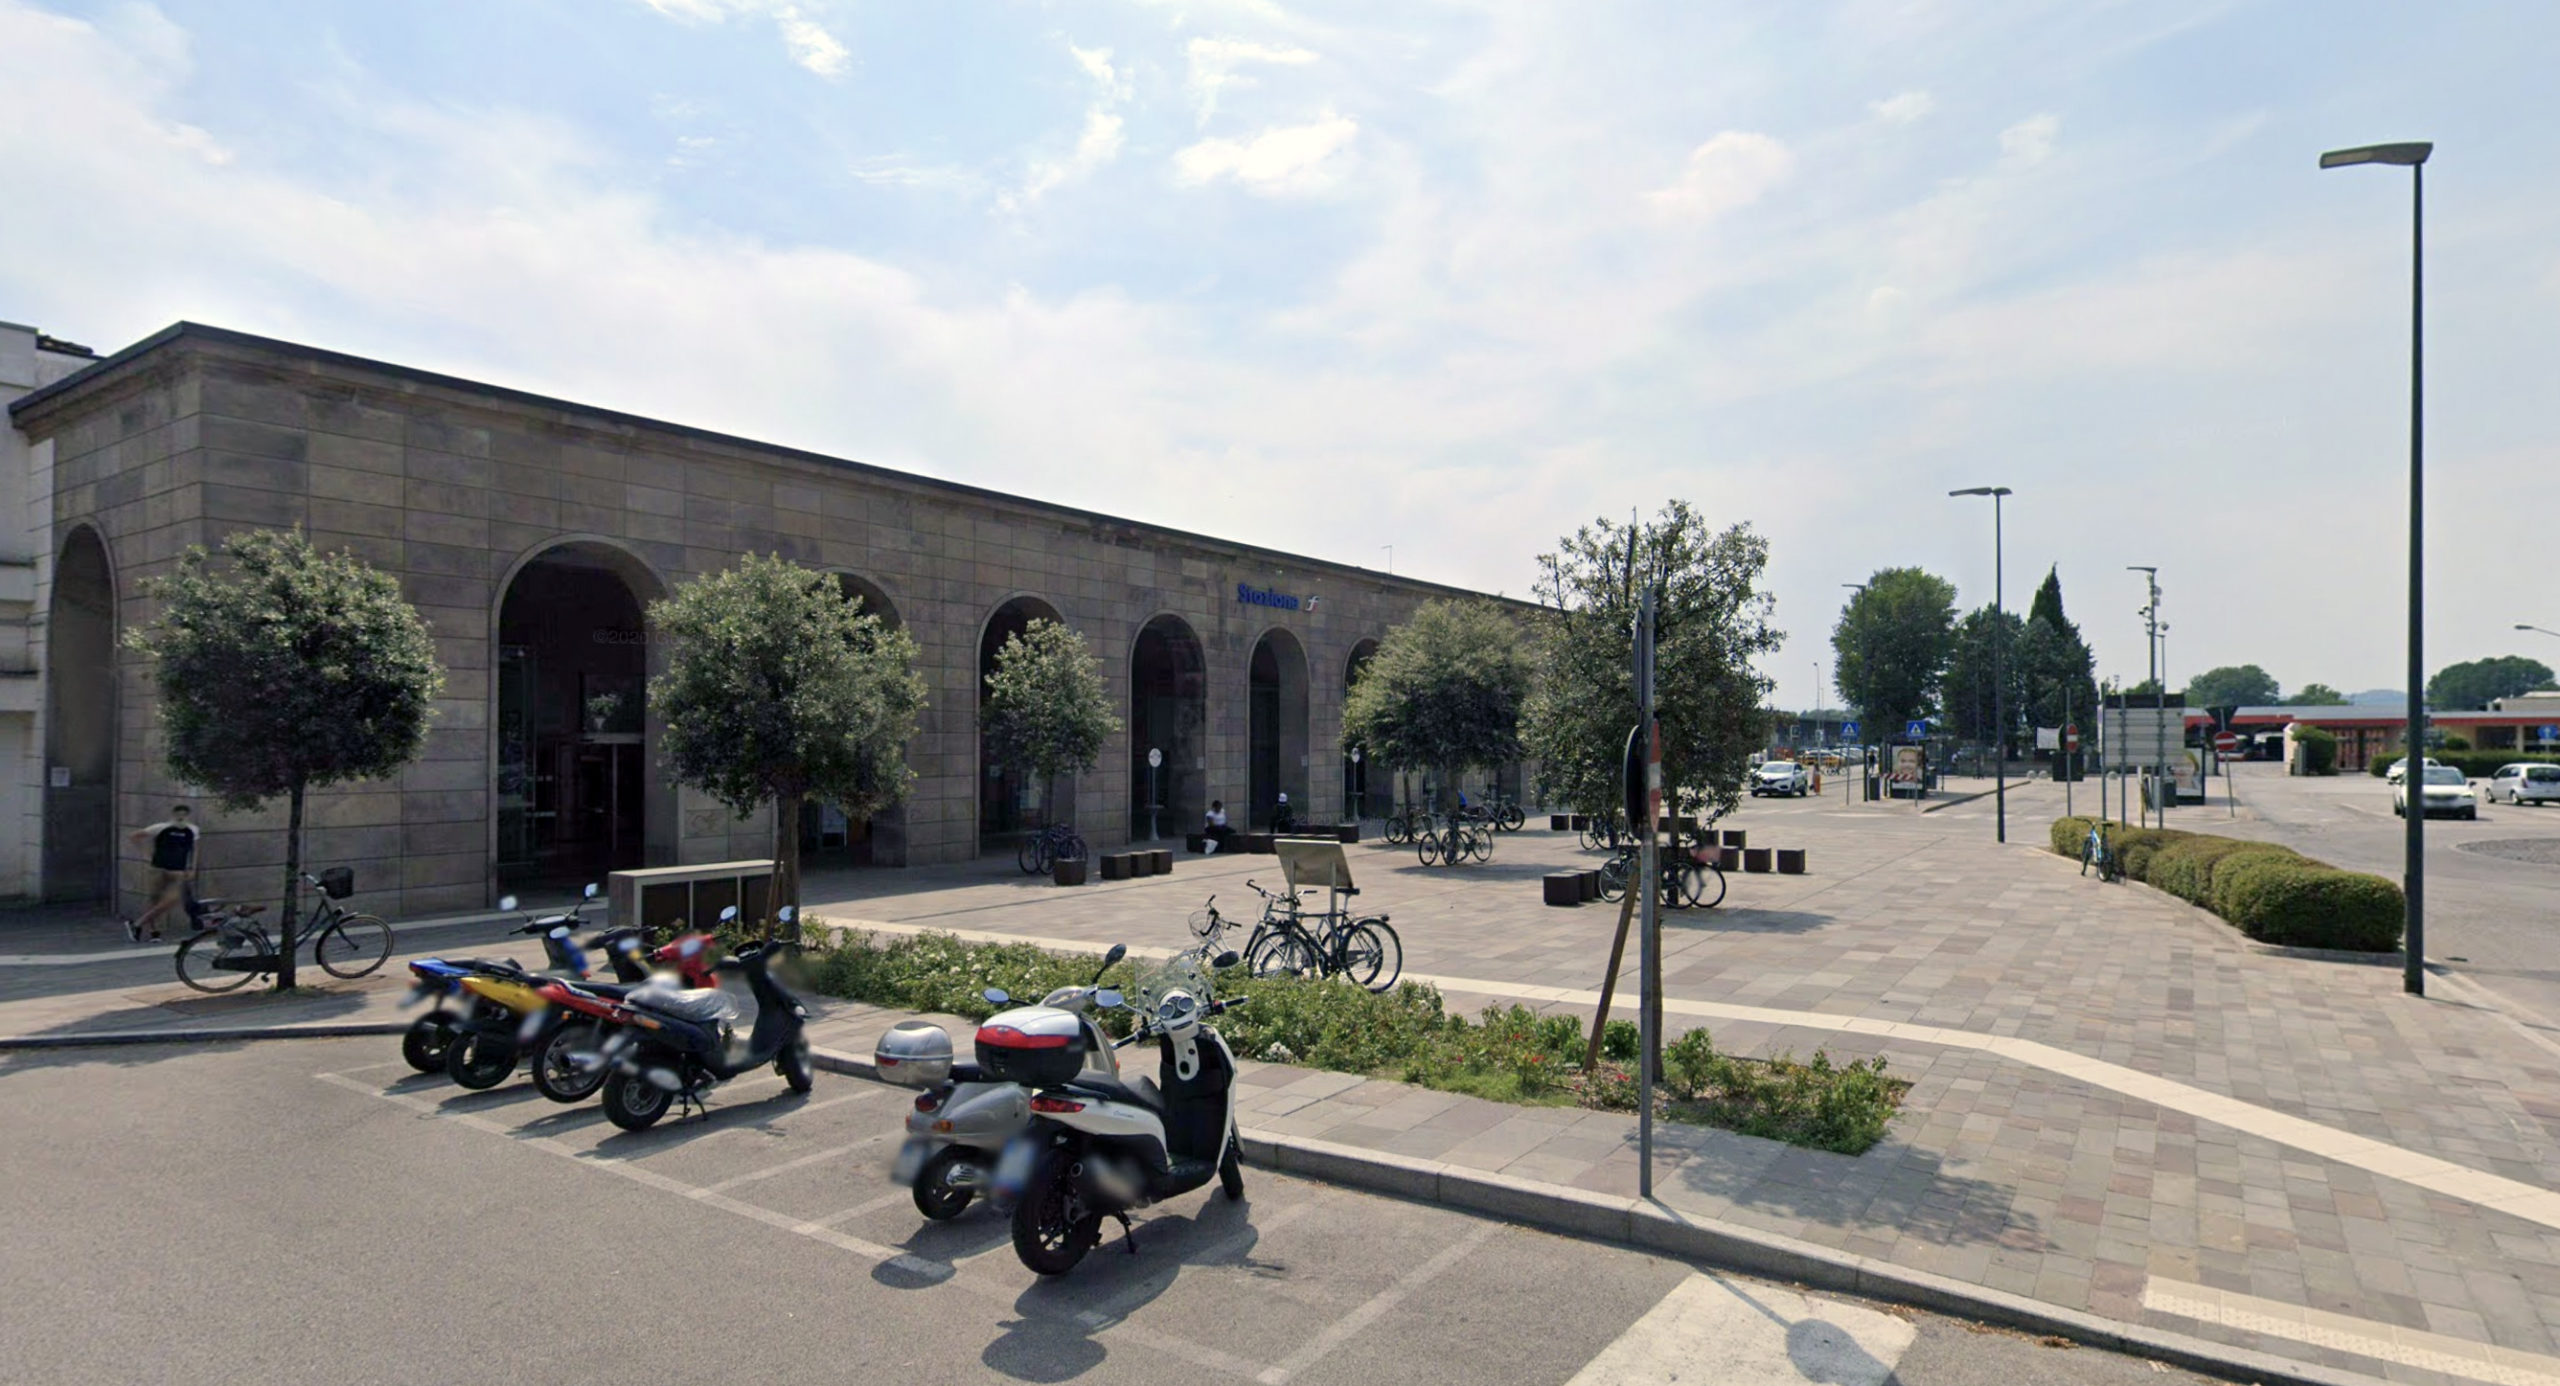 Stazione Ferroviaria di Vicenza